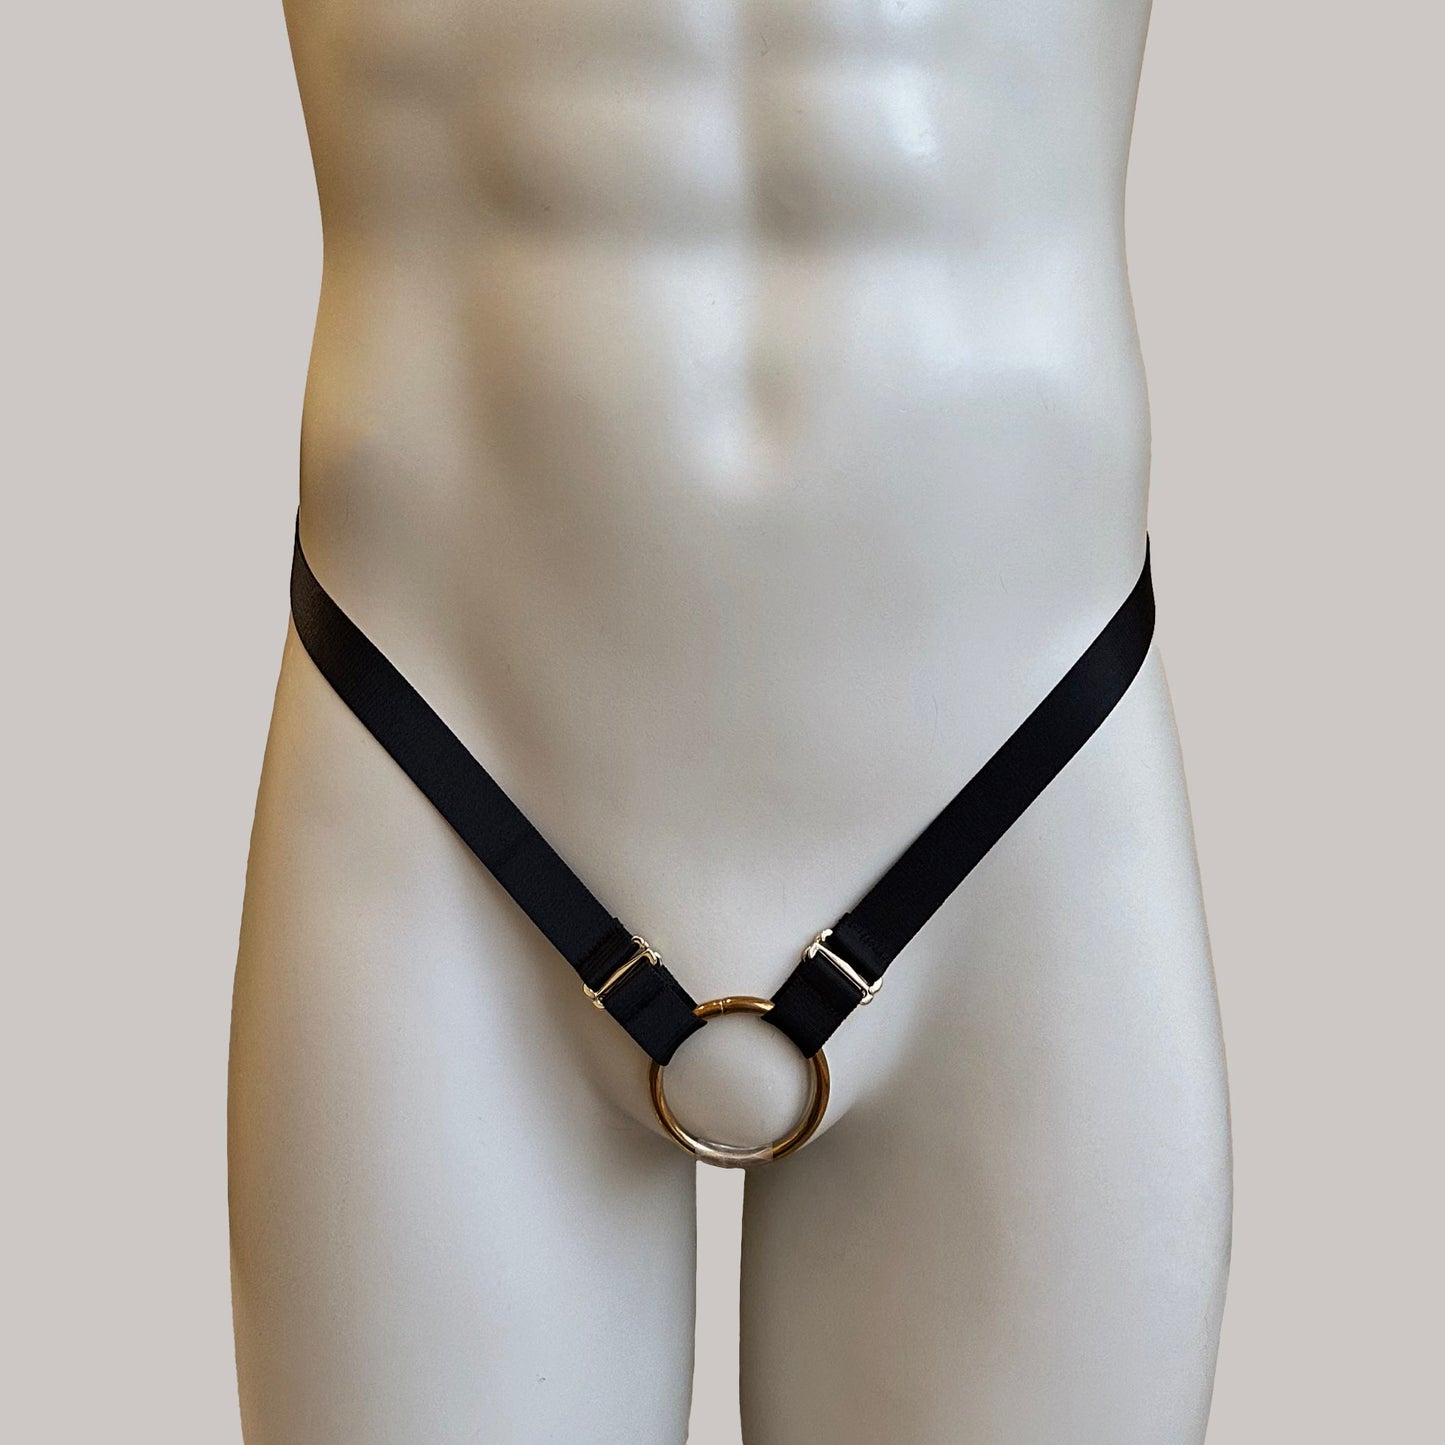 Chastity Cage Anti-falling Universal Waist Strap, Black Two Strap Adjustable Elastic Belt